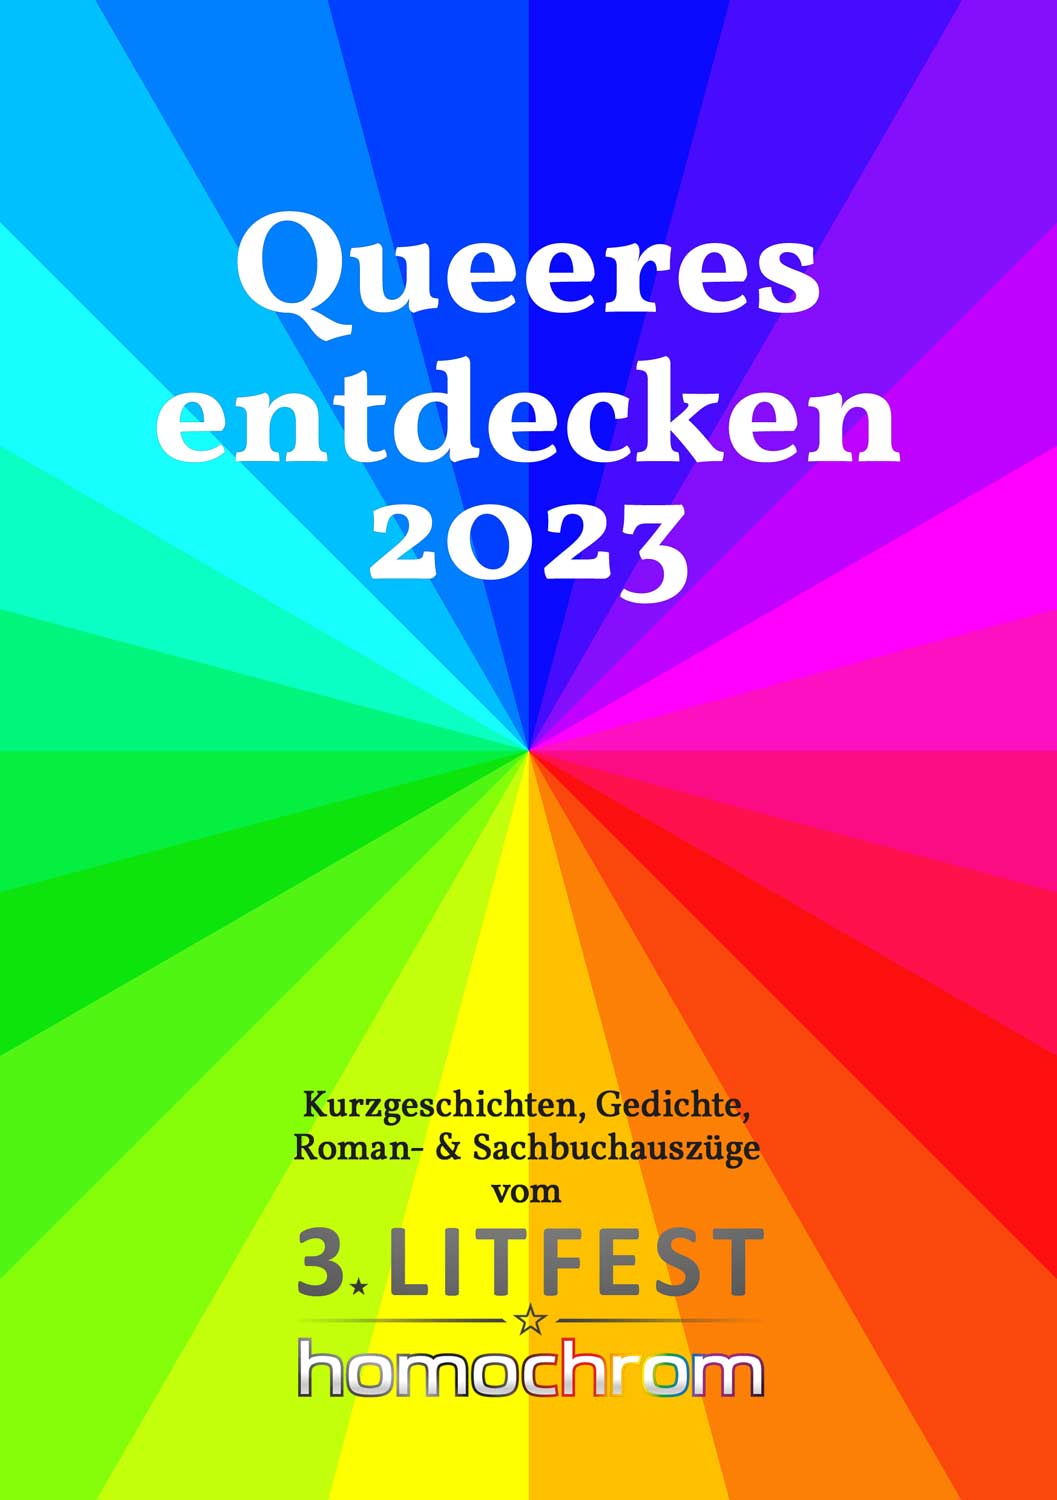 Buch-Cover Queeres entdecken 2023, Anthologie, Sammelband, Festival, Litfest homochrom, queere Literatur, Köln